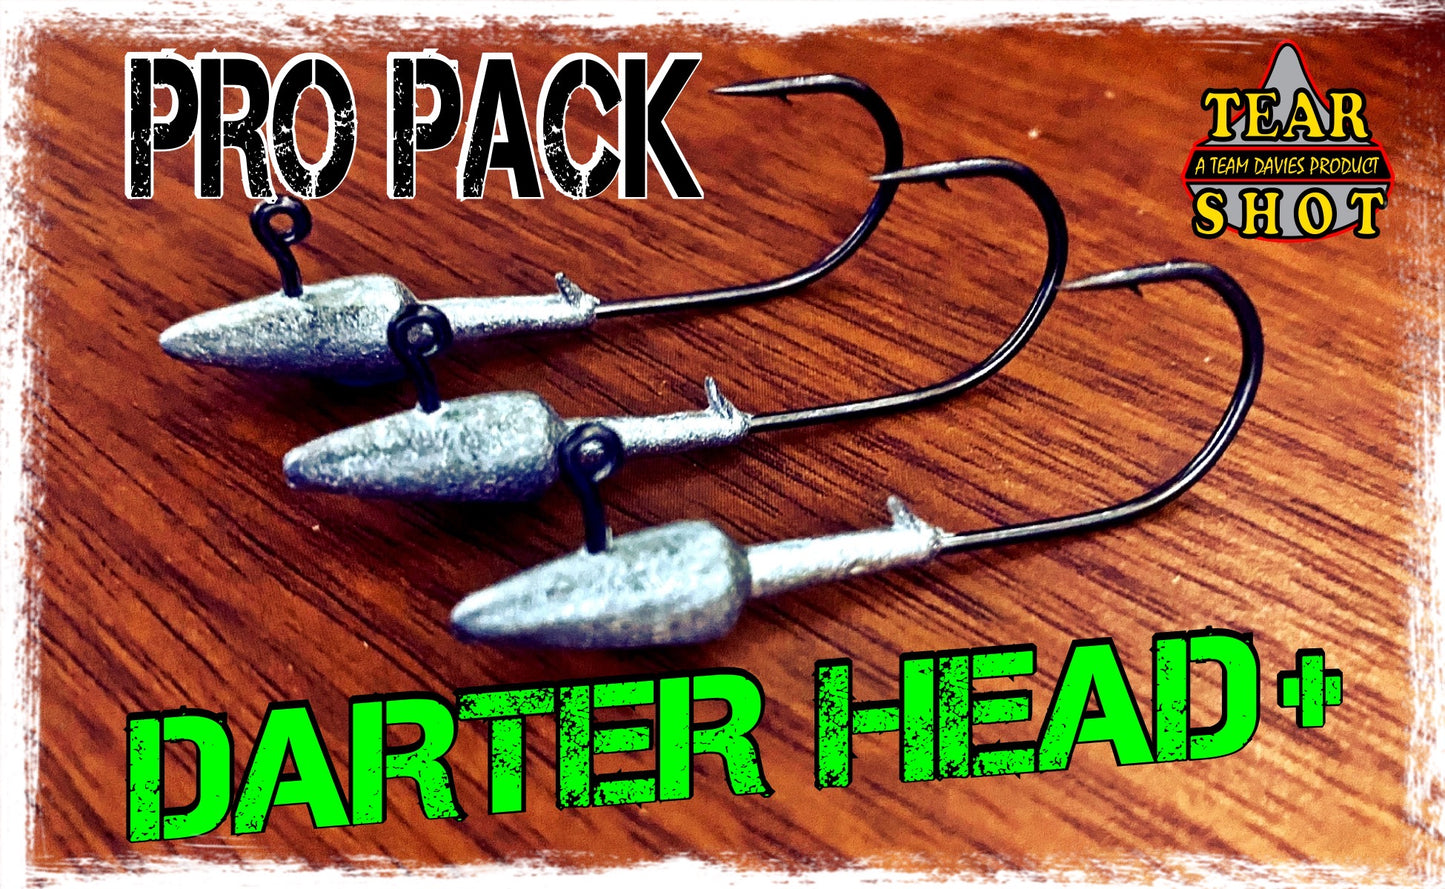 Darter Head Jigs - Pro Pack